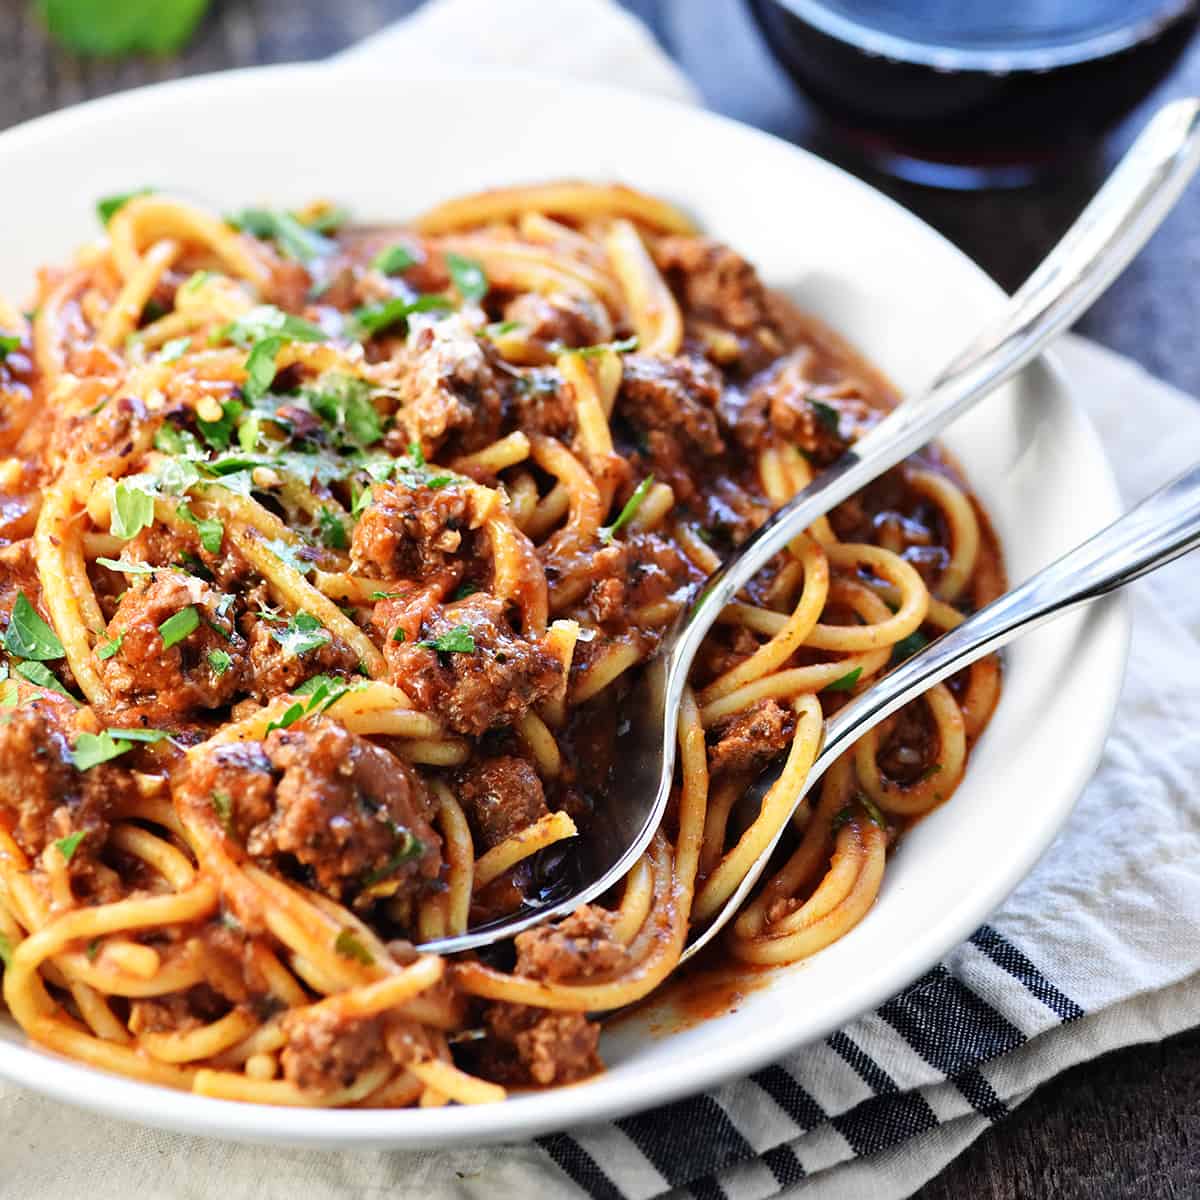 https://www.fivehearthome.com/wp-content/uploads/2019/03/One-Pot-Spaghetti-Recipe_1200pxSquare.jpg